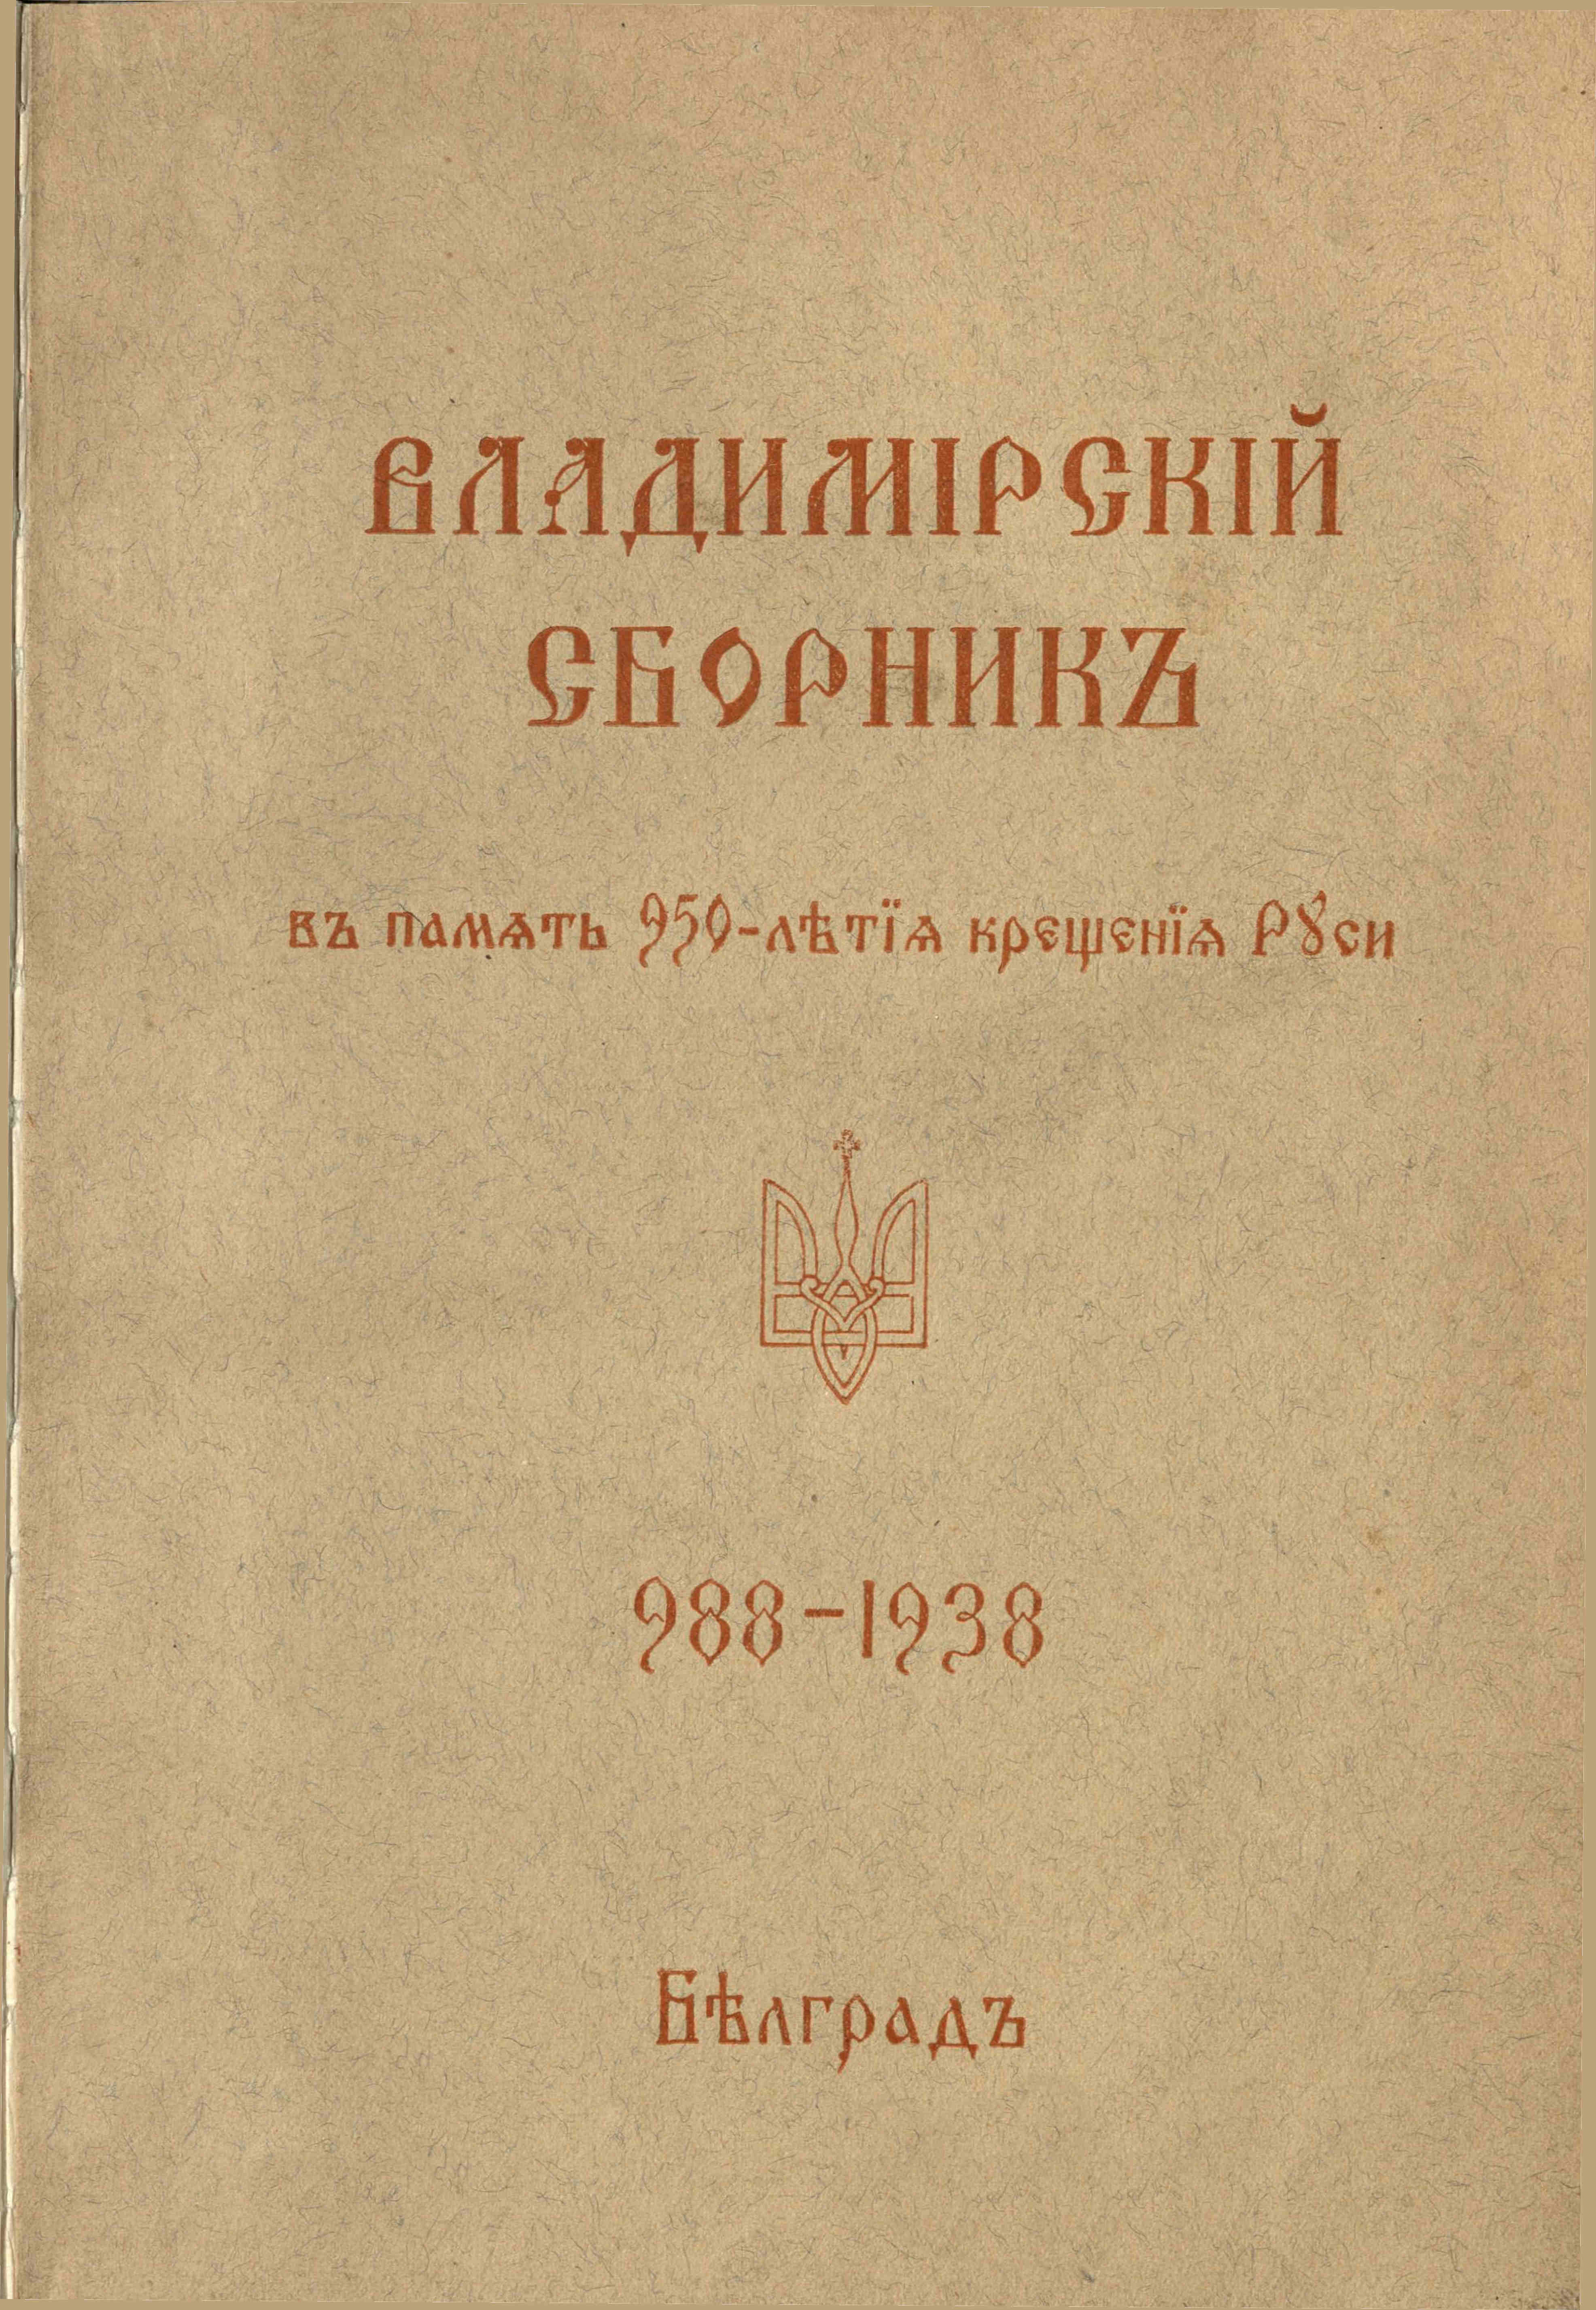 vladimirsky sb 1938 0001